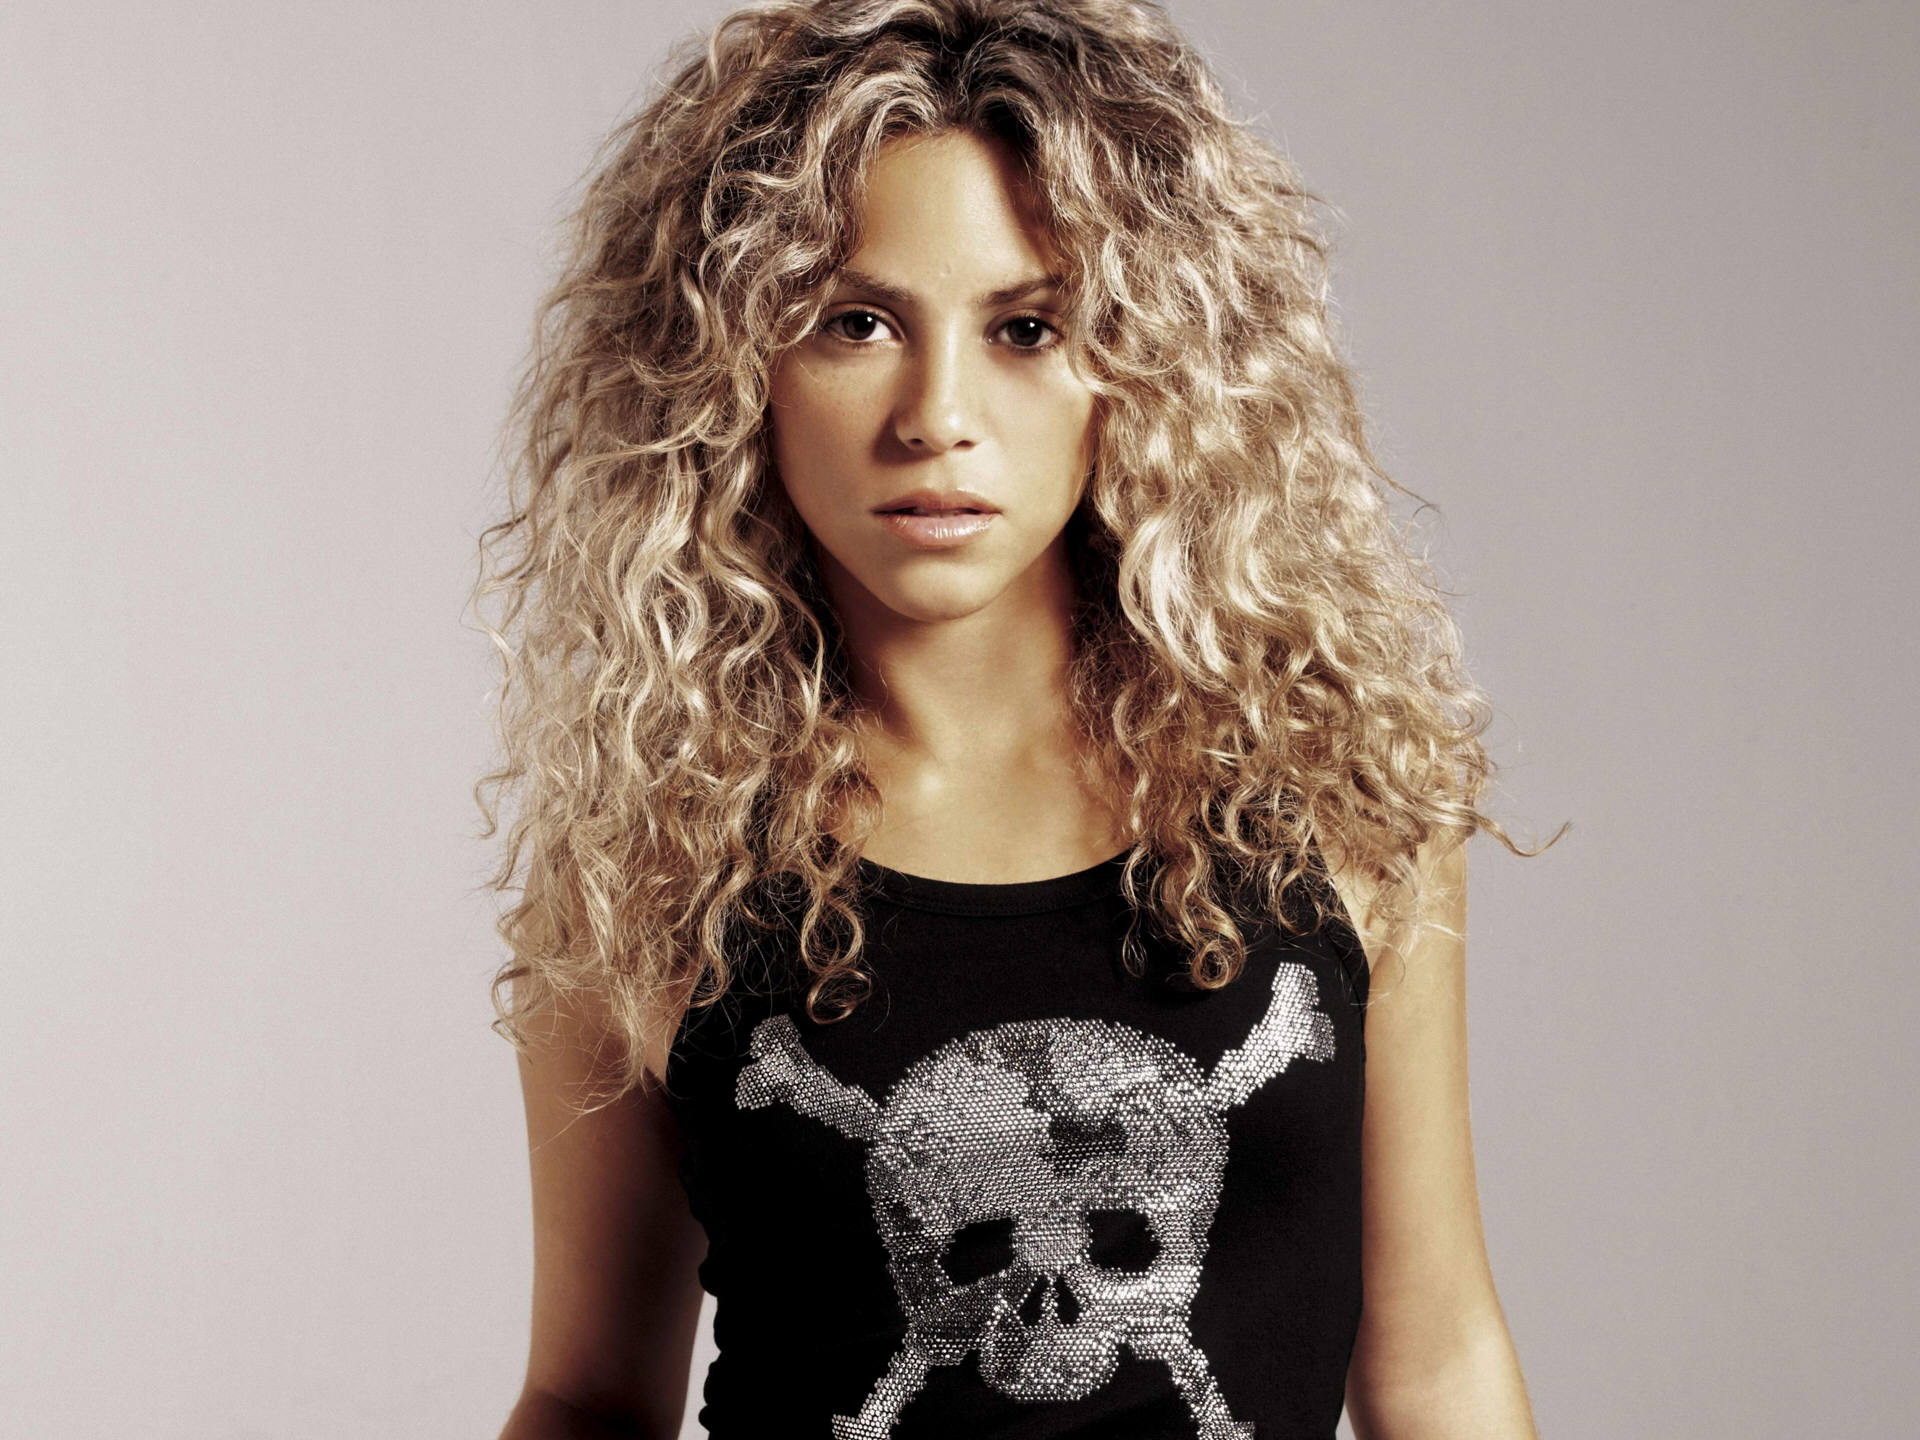 ltkuvxah.jpg aus dem Album Shakira Wallpapers von Wesker - directupload.net